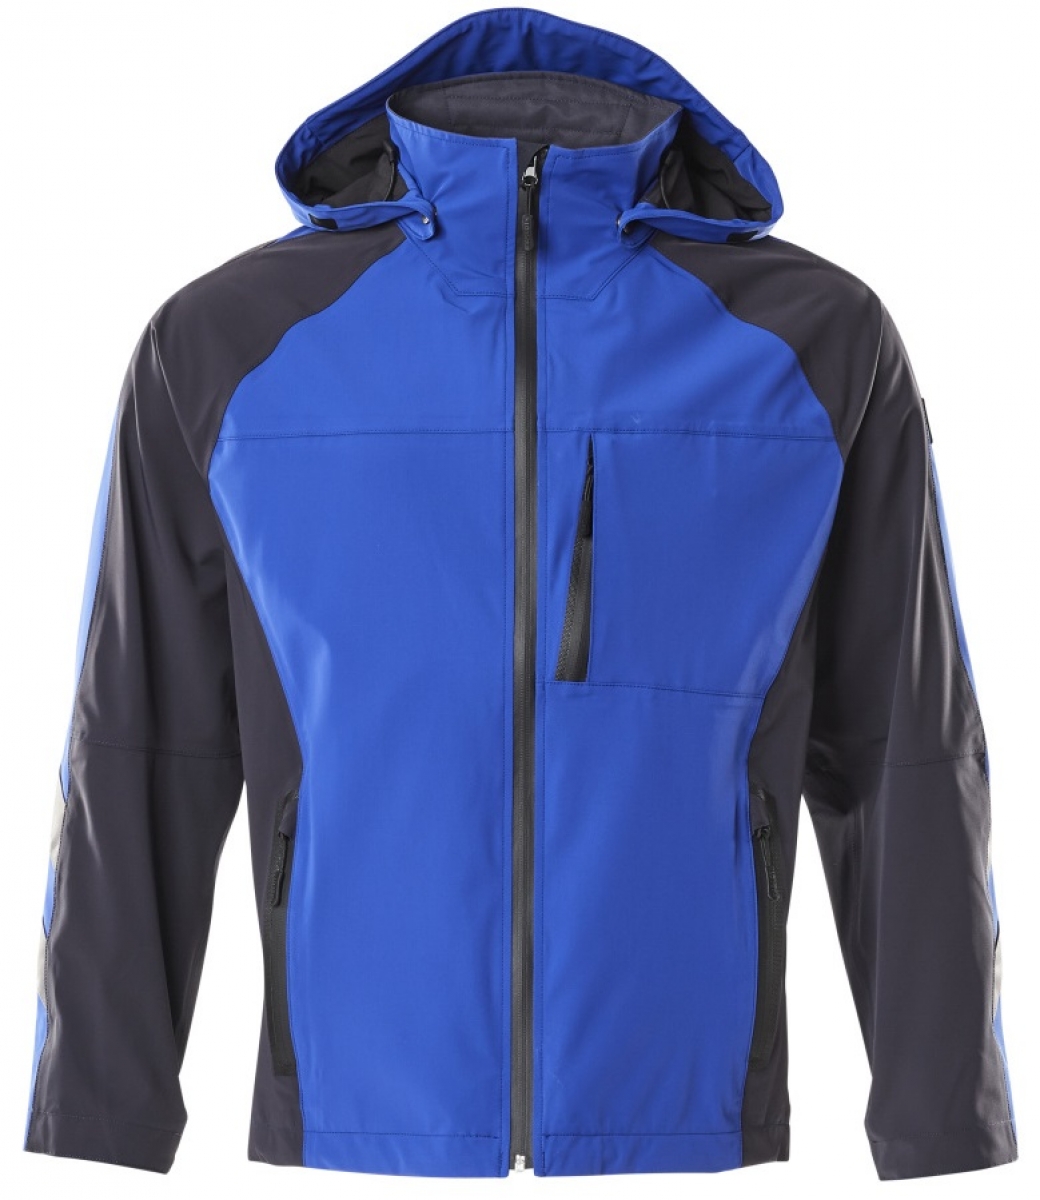 MASCOT-Workwear, Klteschutz, Hard Shell Jacke, 200 g/m, kornblau/schwarzblau